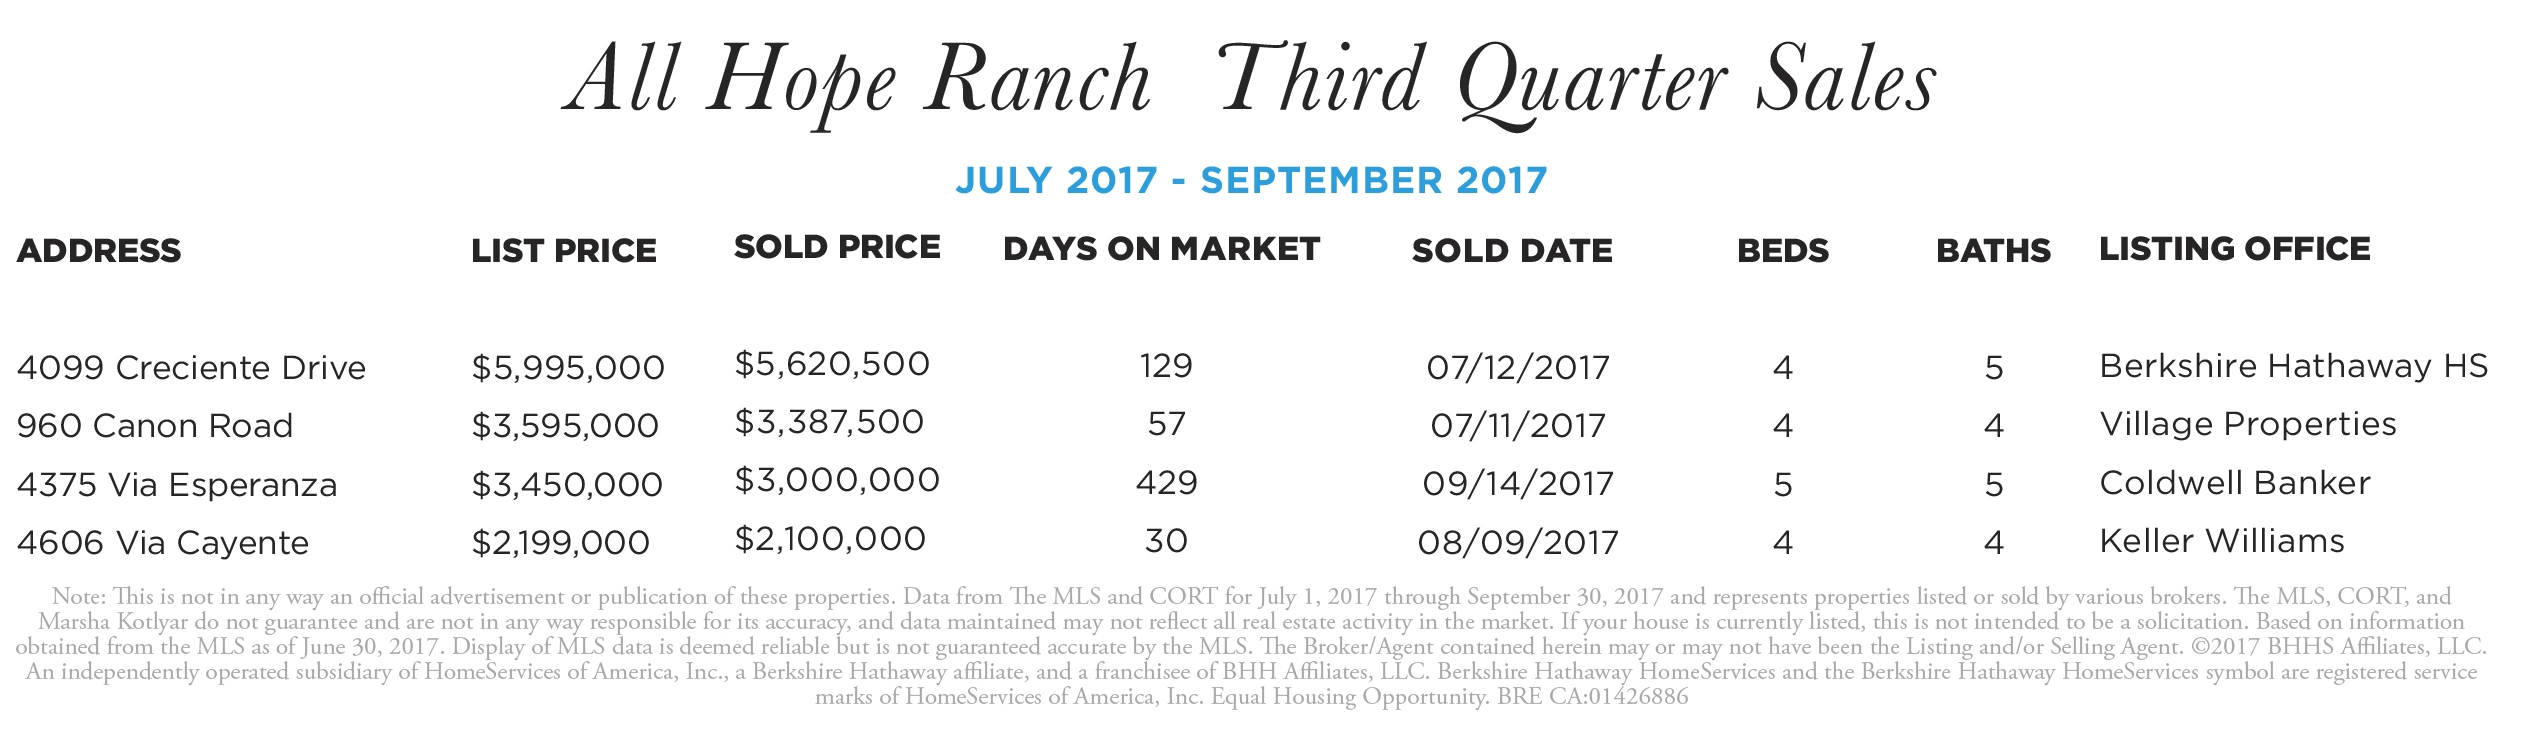 Hope Ranch 3rd quarter sales